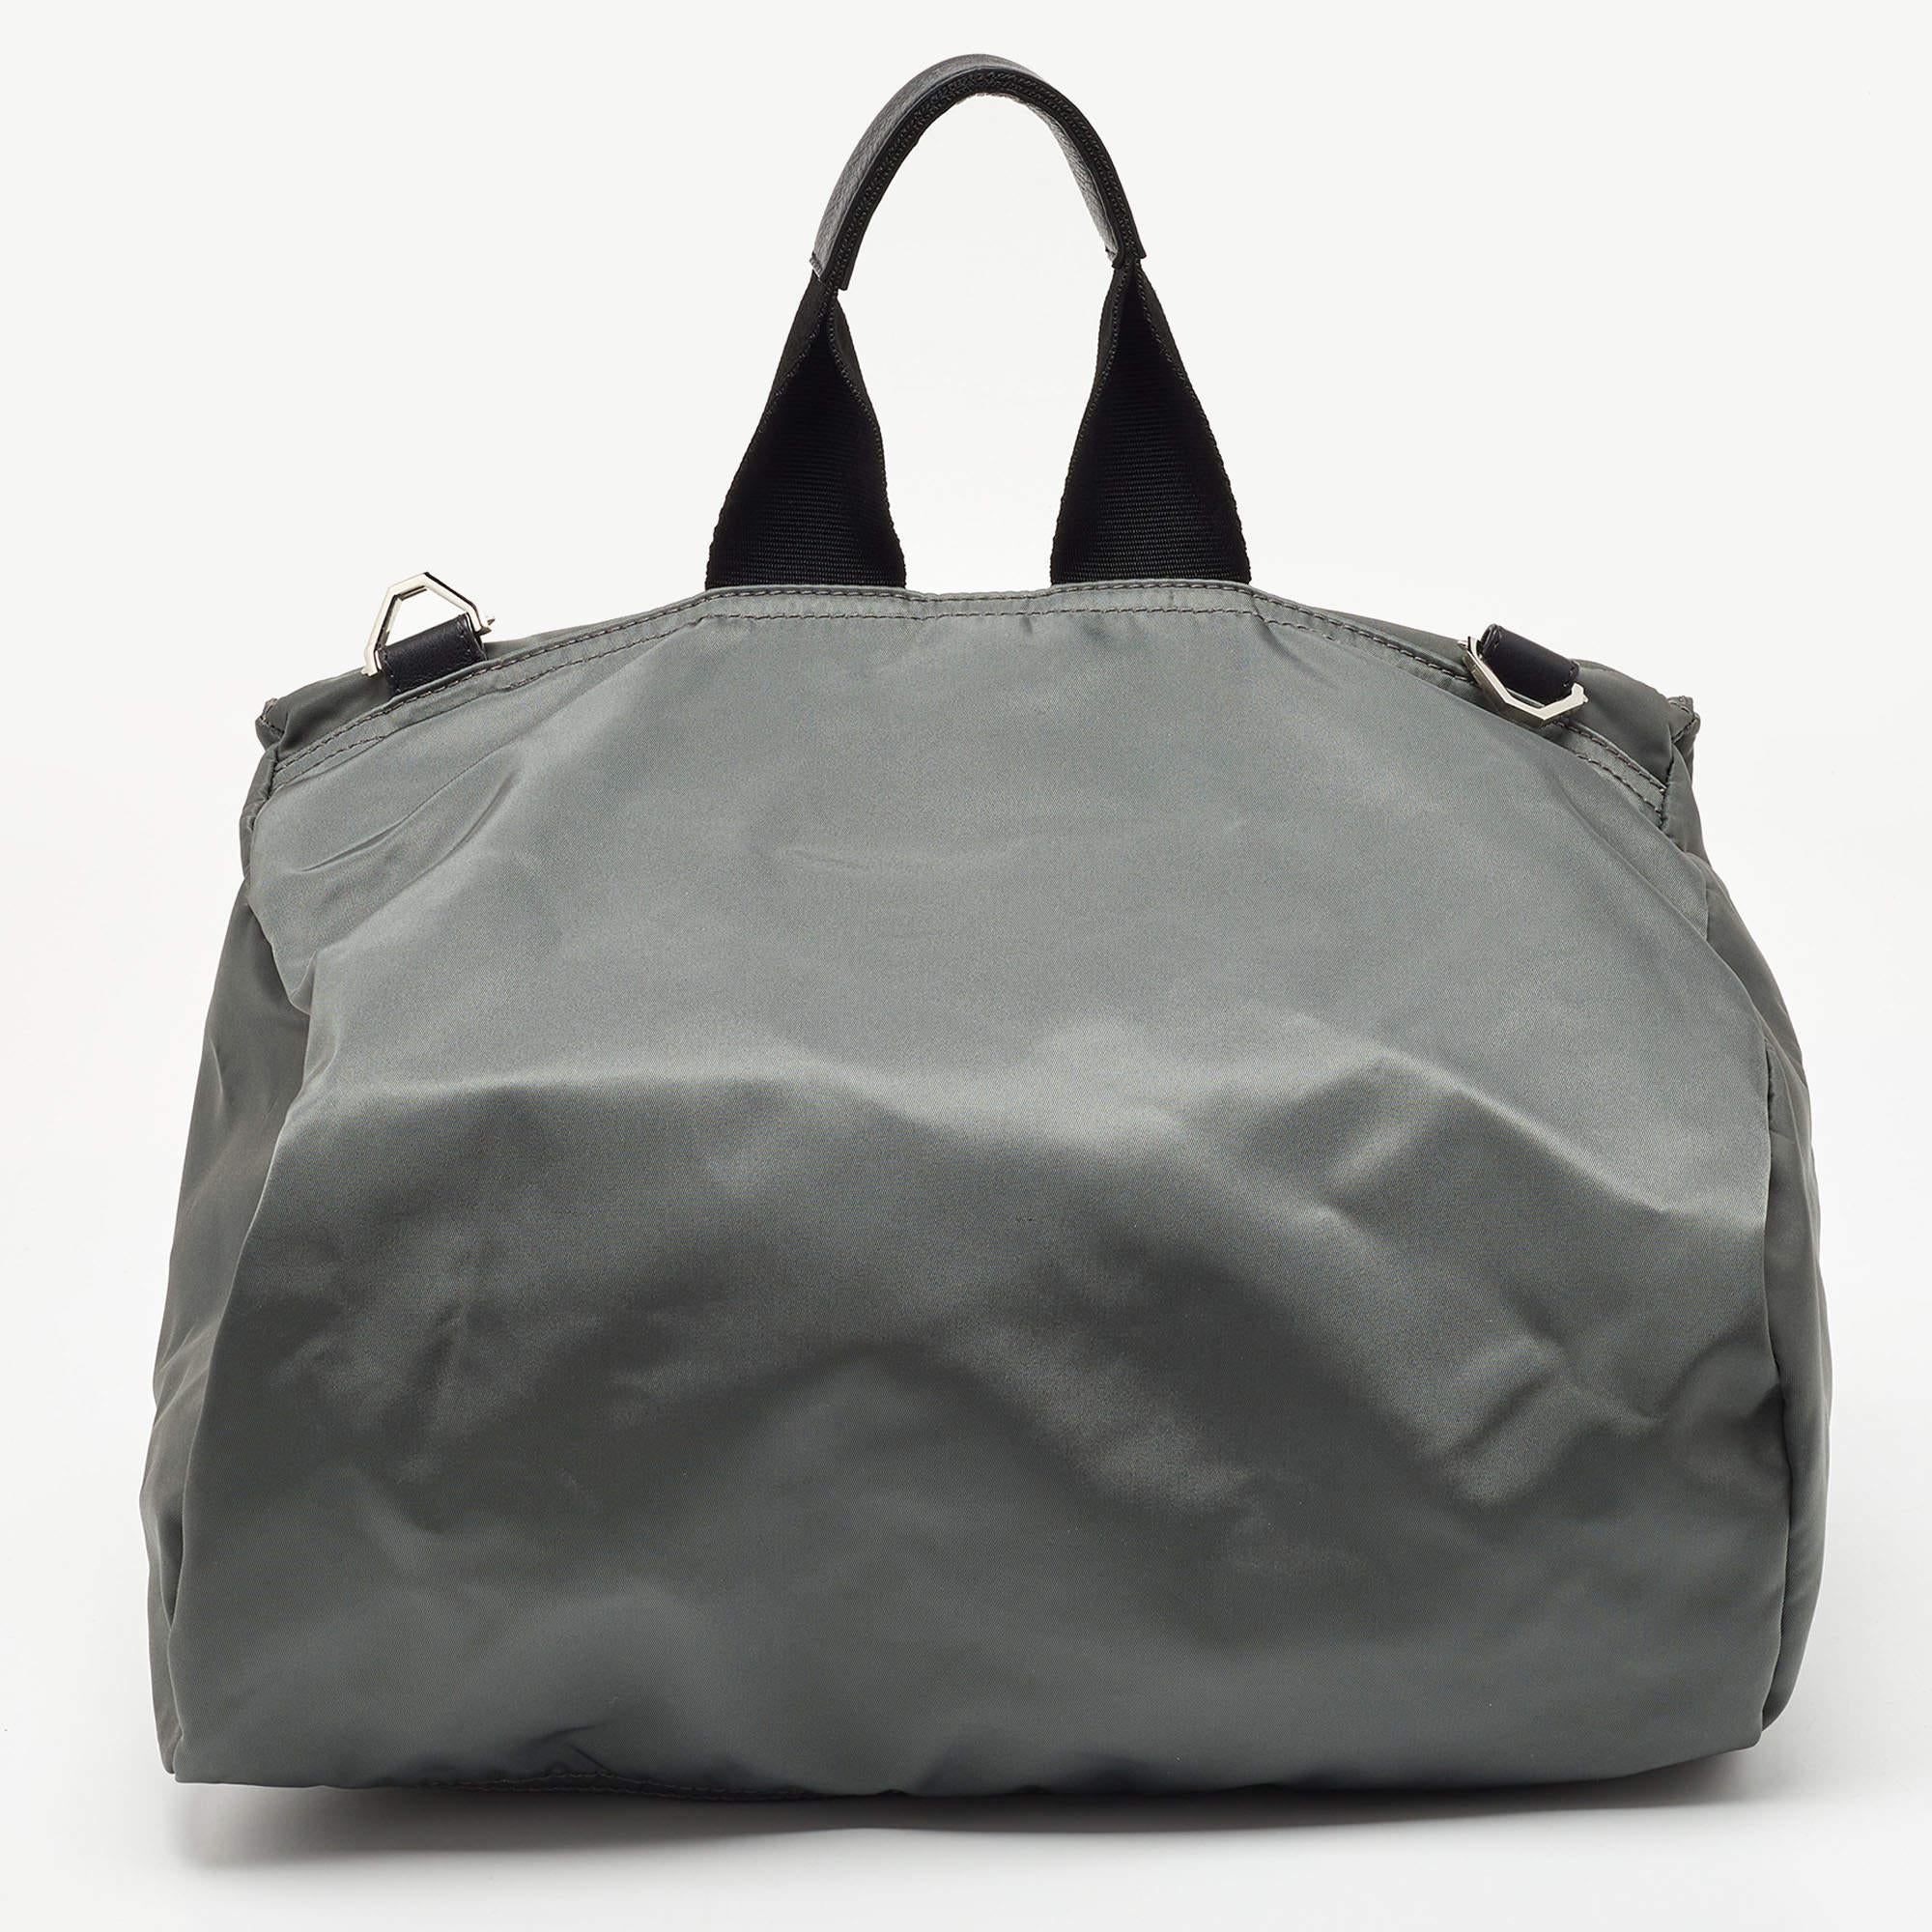 Givenchy Grey/Black Nylon Pandora Top Handle Bag For Sale 2